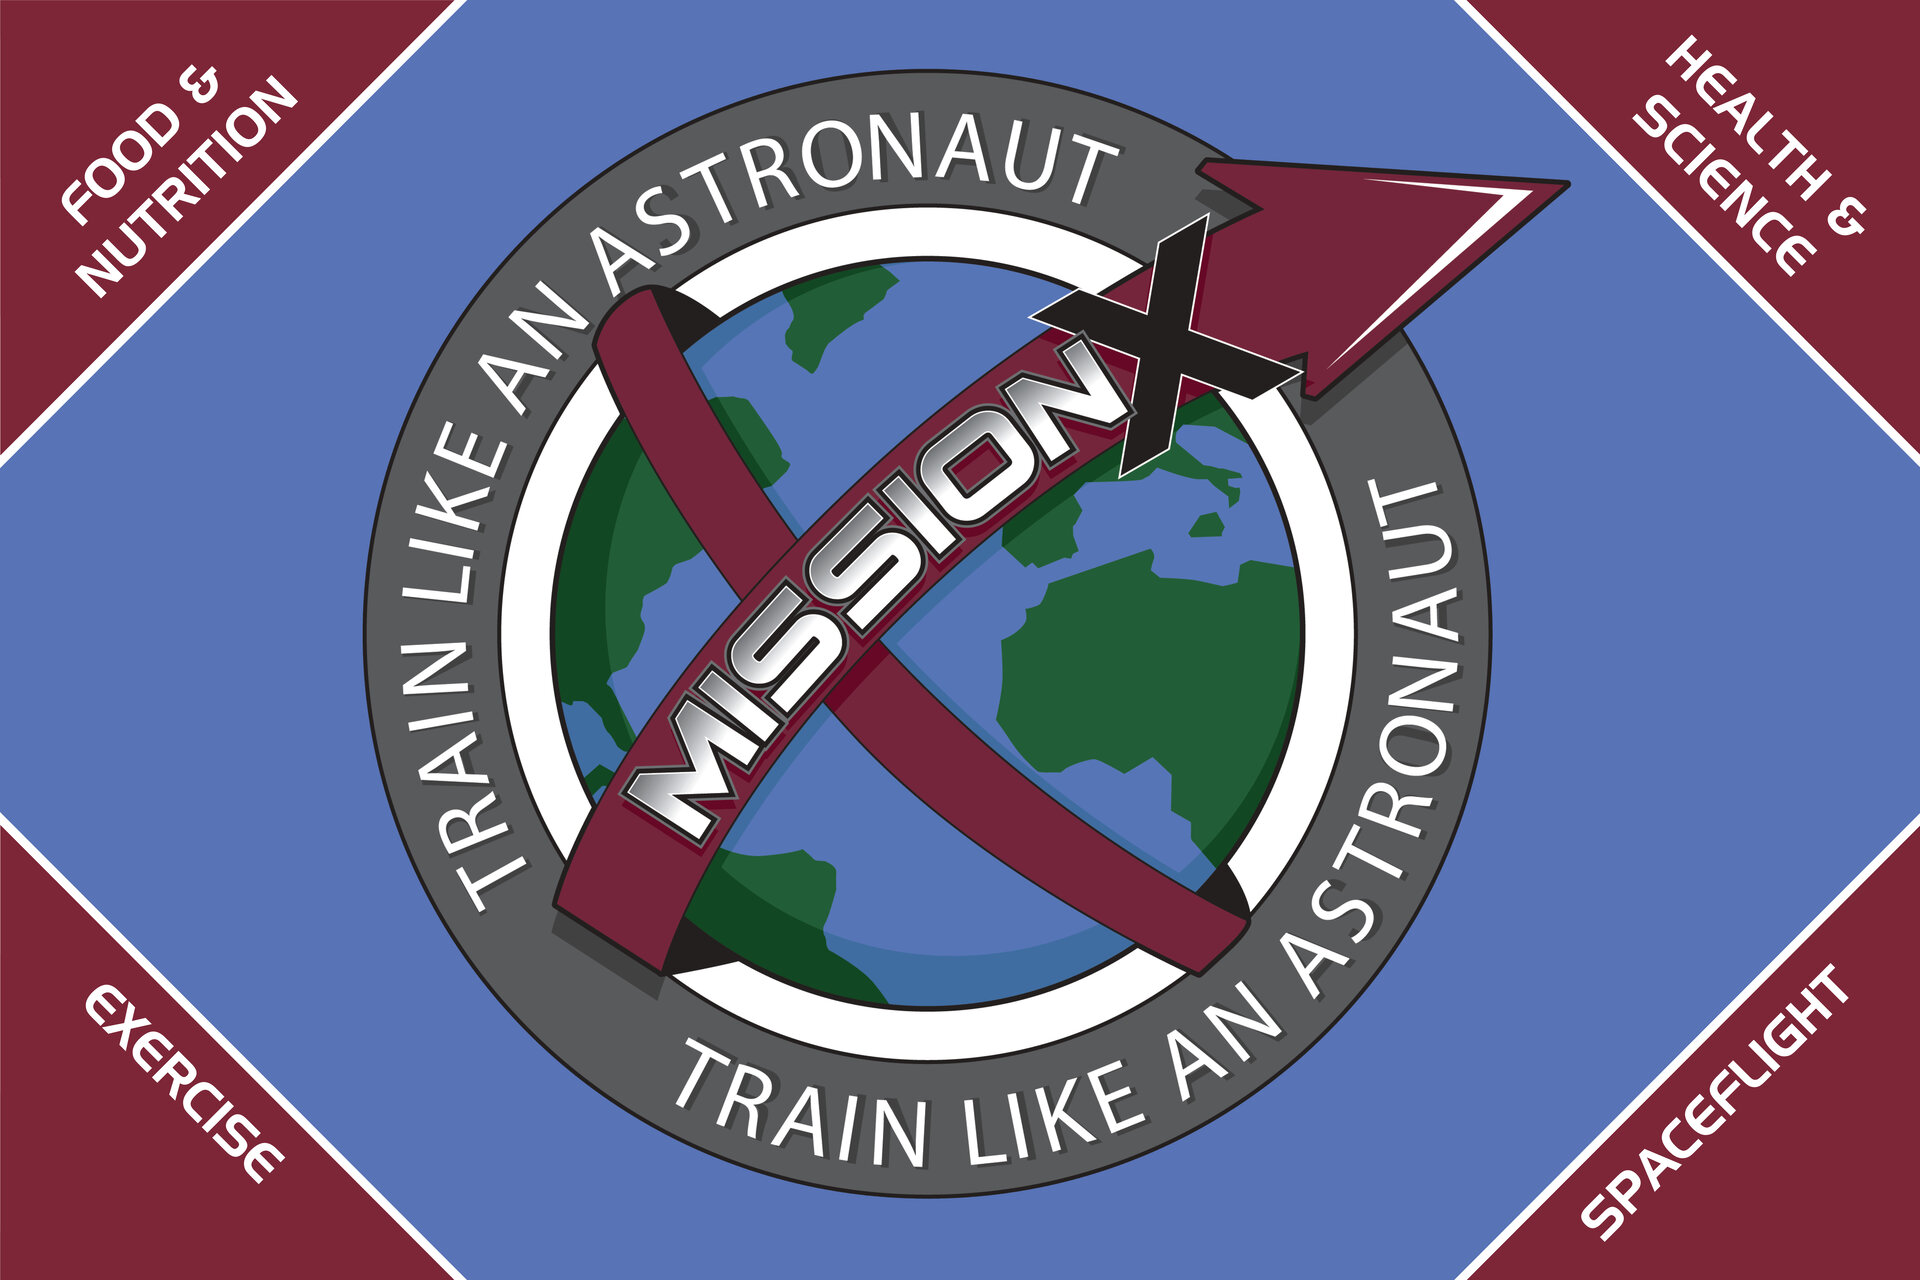 Mission X - Train Like an Astronaut